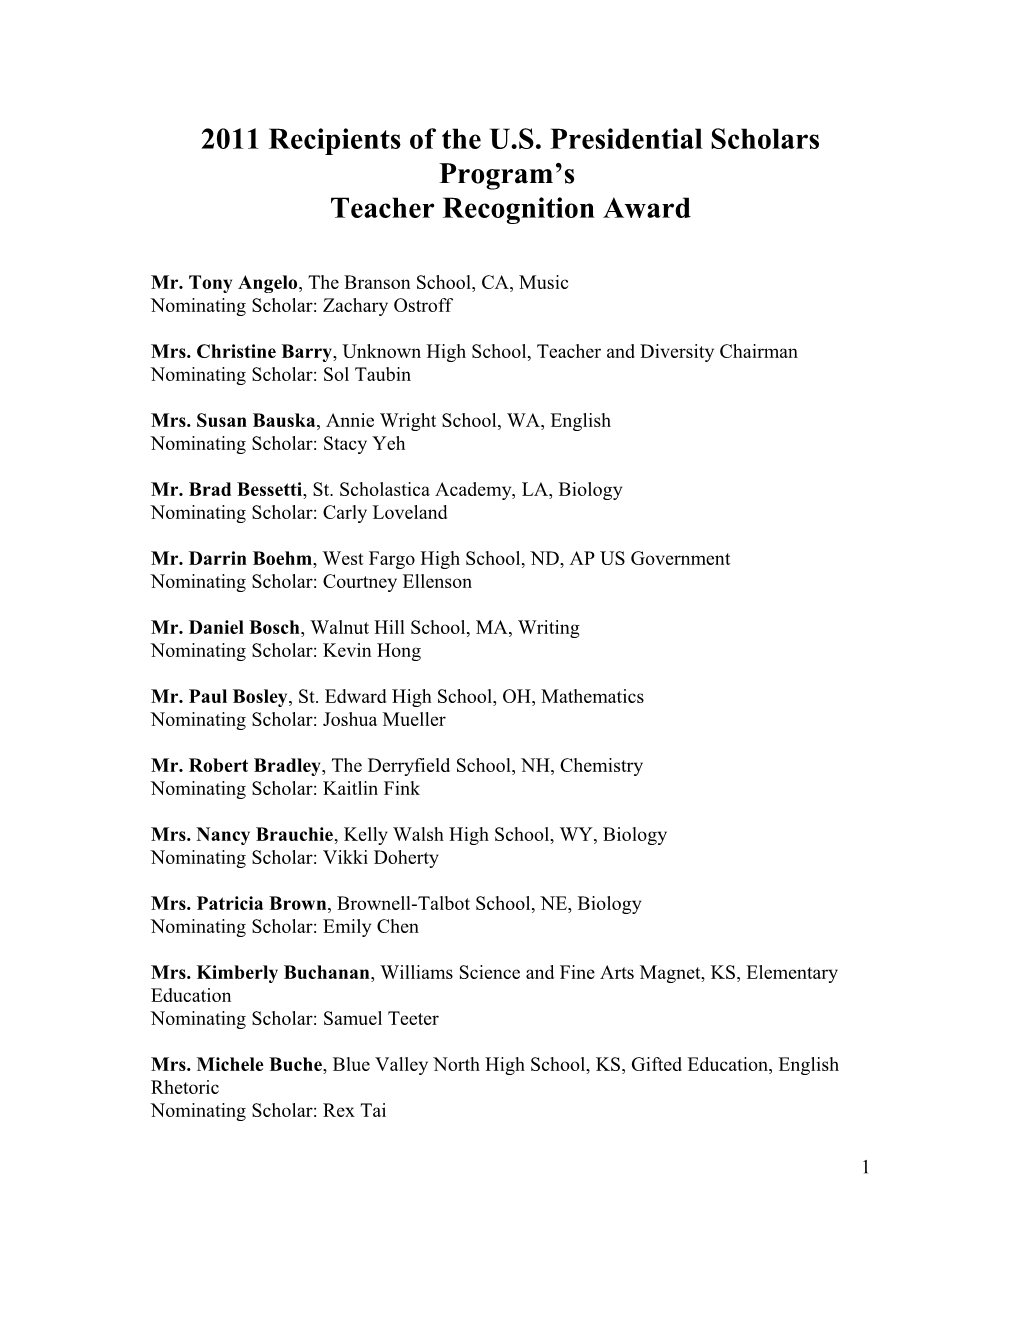 2011 Teacher Recognition Award: Presidential Scholars Program's May 2011 (Msword)